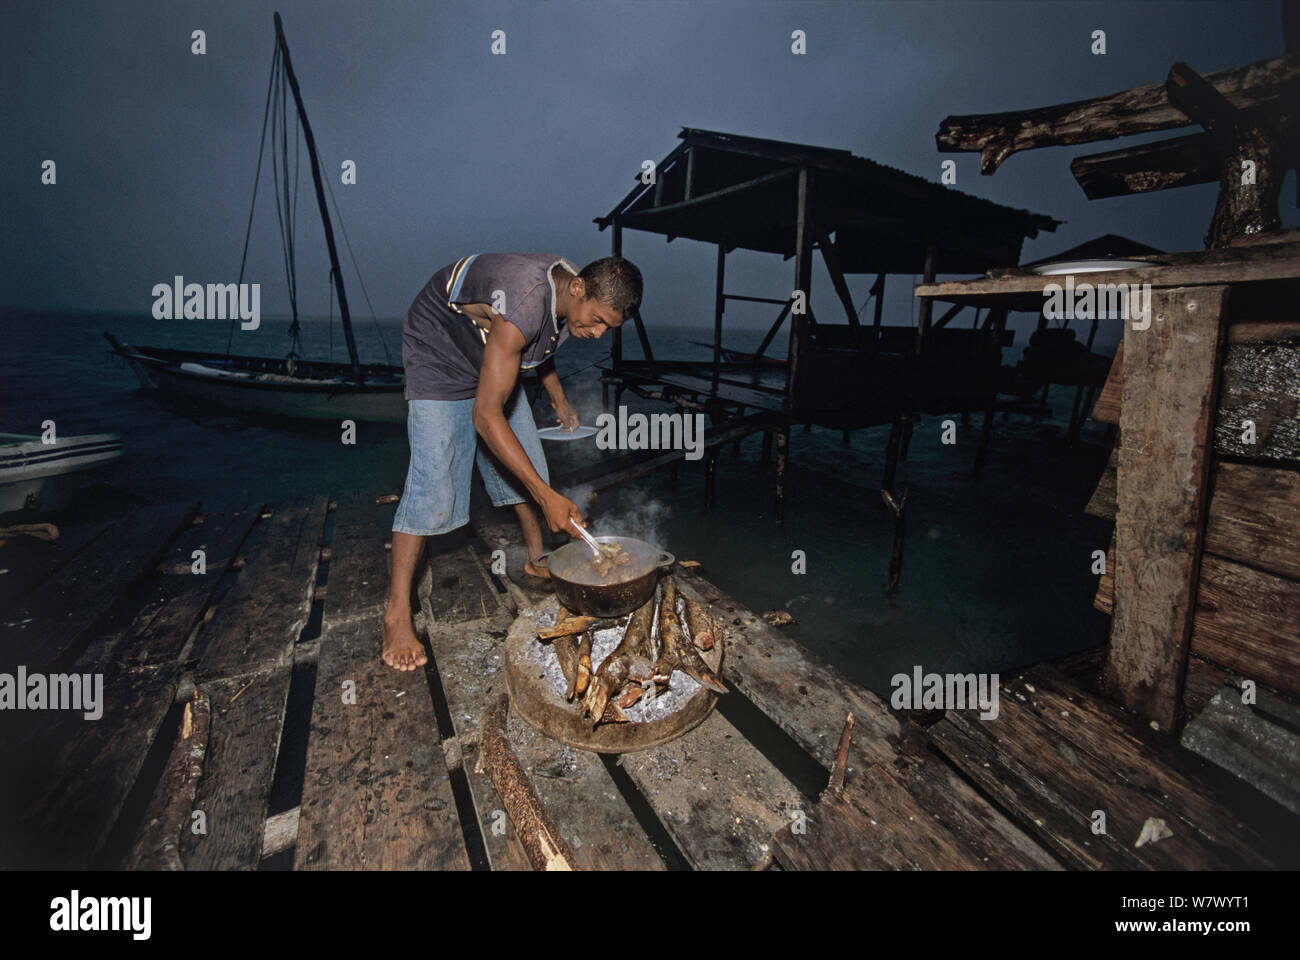 Miskito Indian fisherman cooking Green turtle (Chelonia mydas) meat, Puerto Cabezas, Nicaragua, Caribbean Sea. Model released. Stock Photo